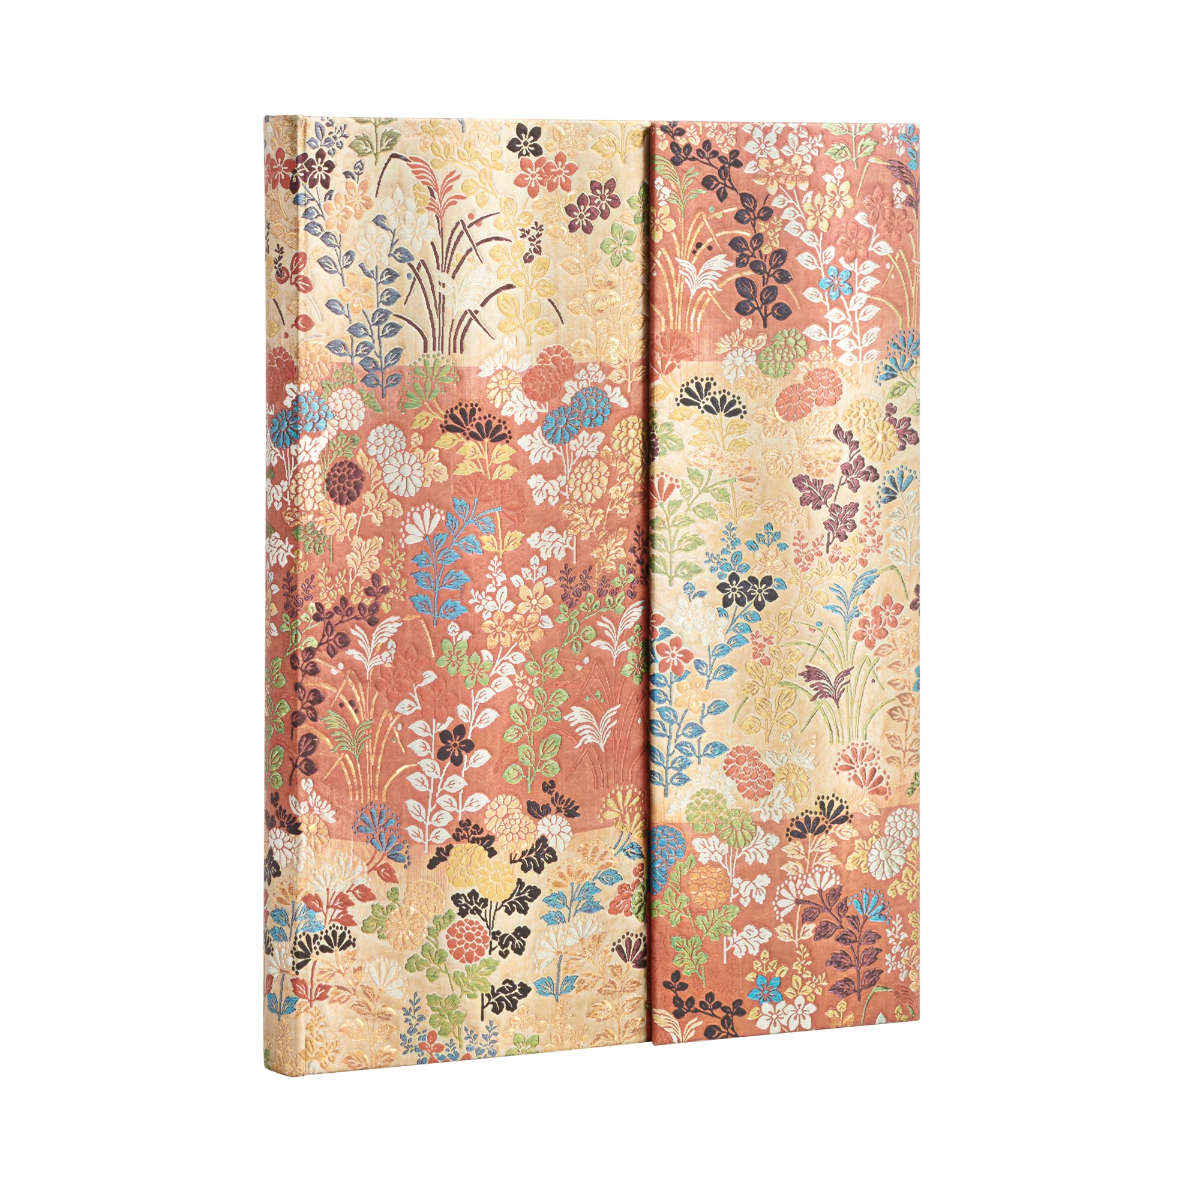 Paperblanks Kara-ori, Japanese Kimono Ultra 7 x 9 Inch Journal